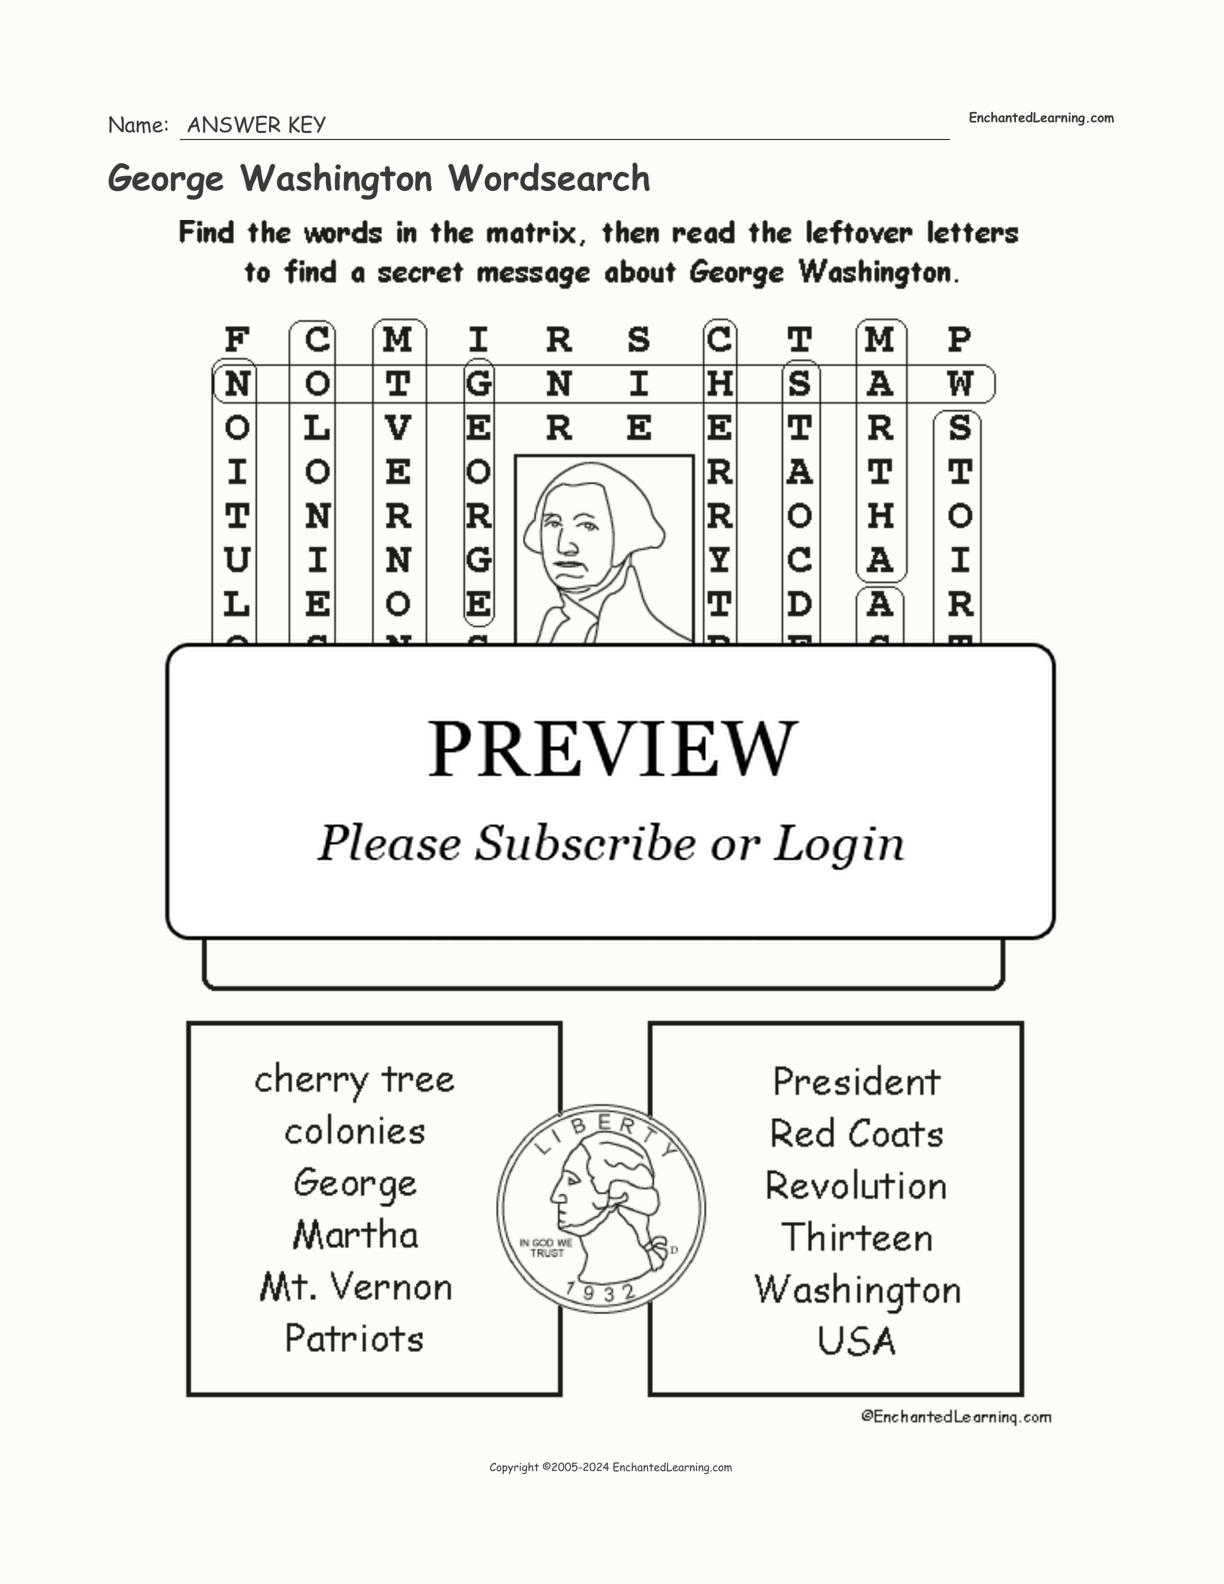 George Washington Wordsearch interactive worksheet page 2